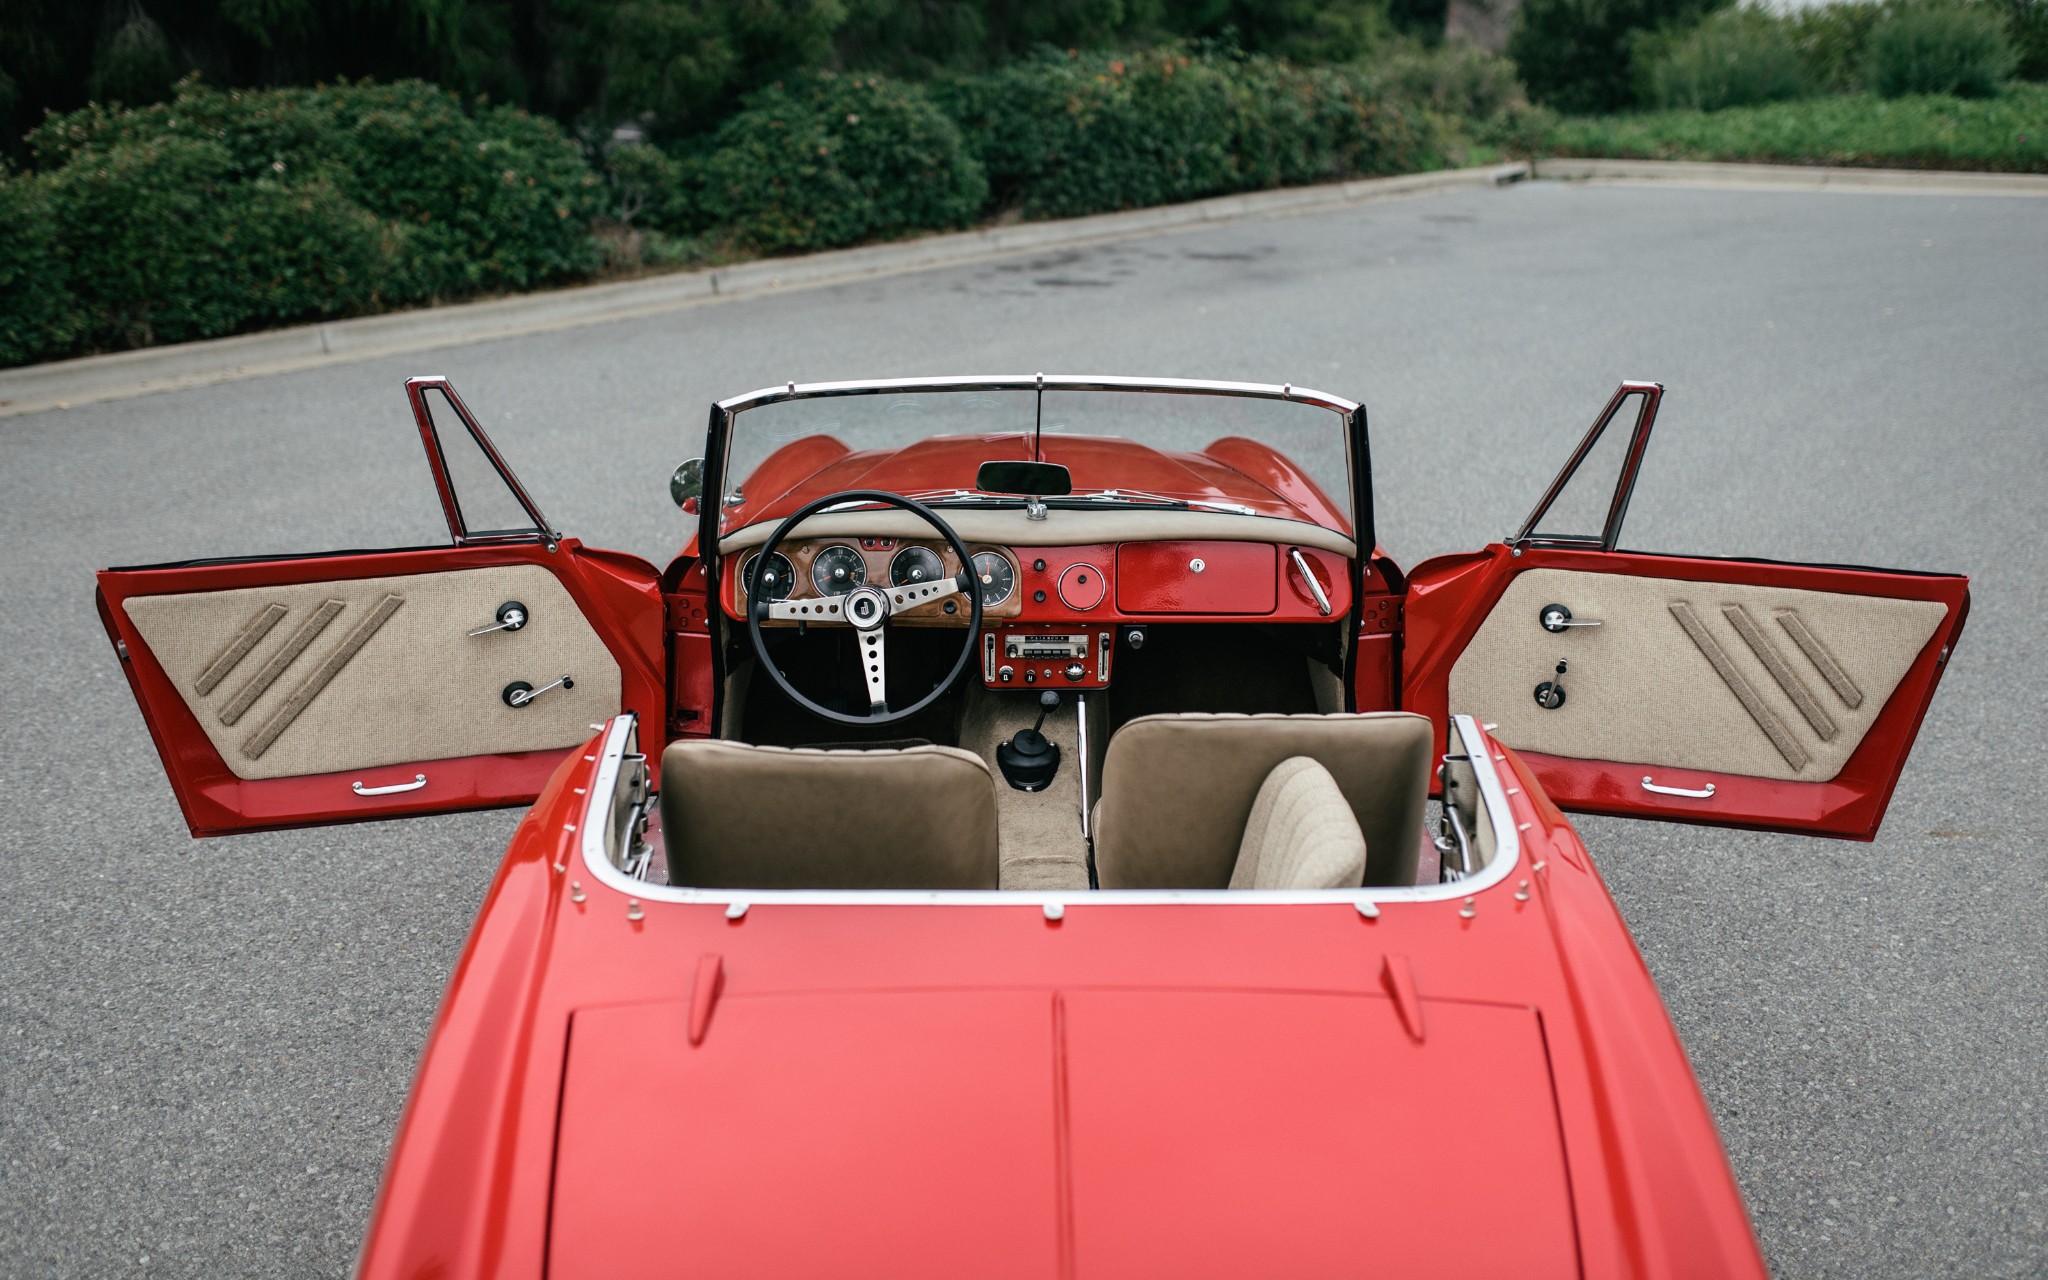 1964 datsun 1500 fairlady interior - monterey touring vehicles - monterey california